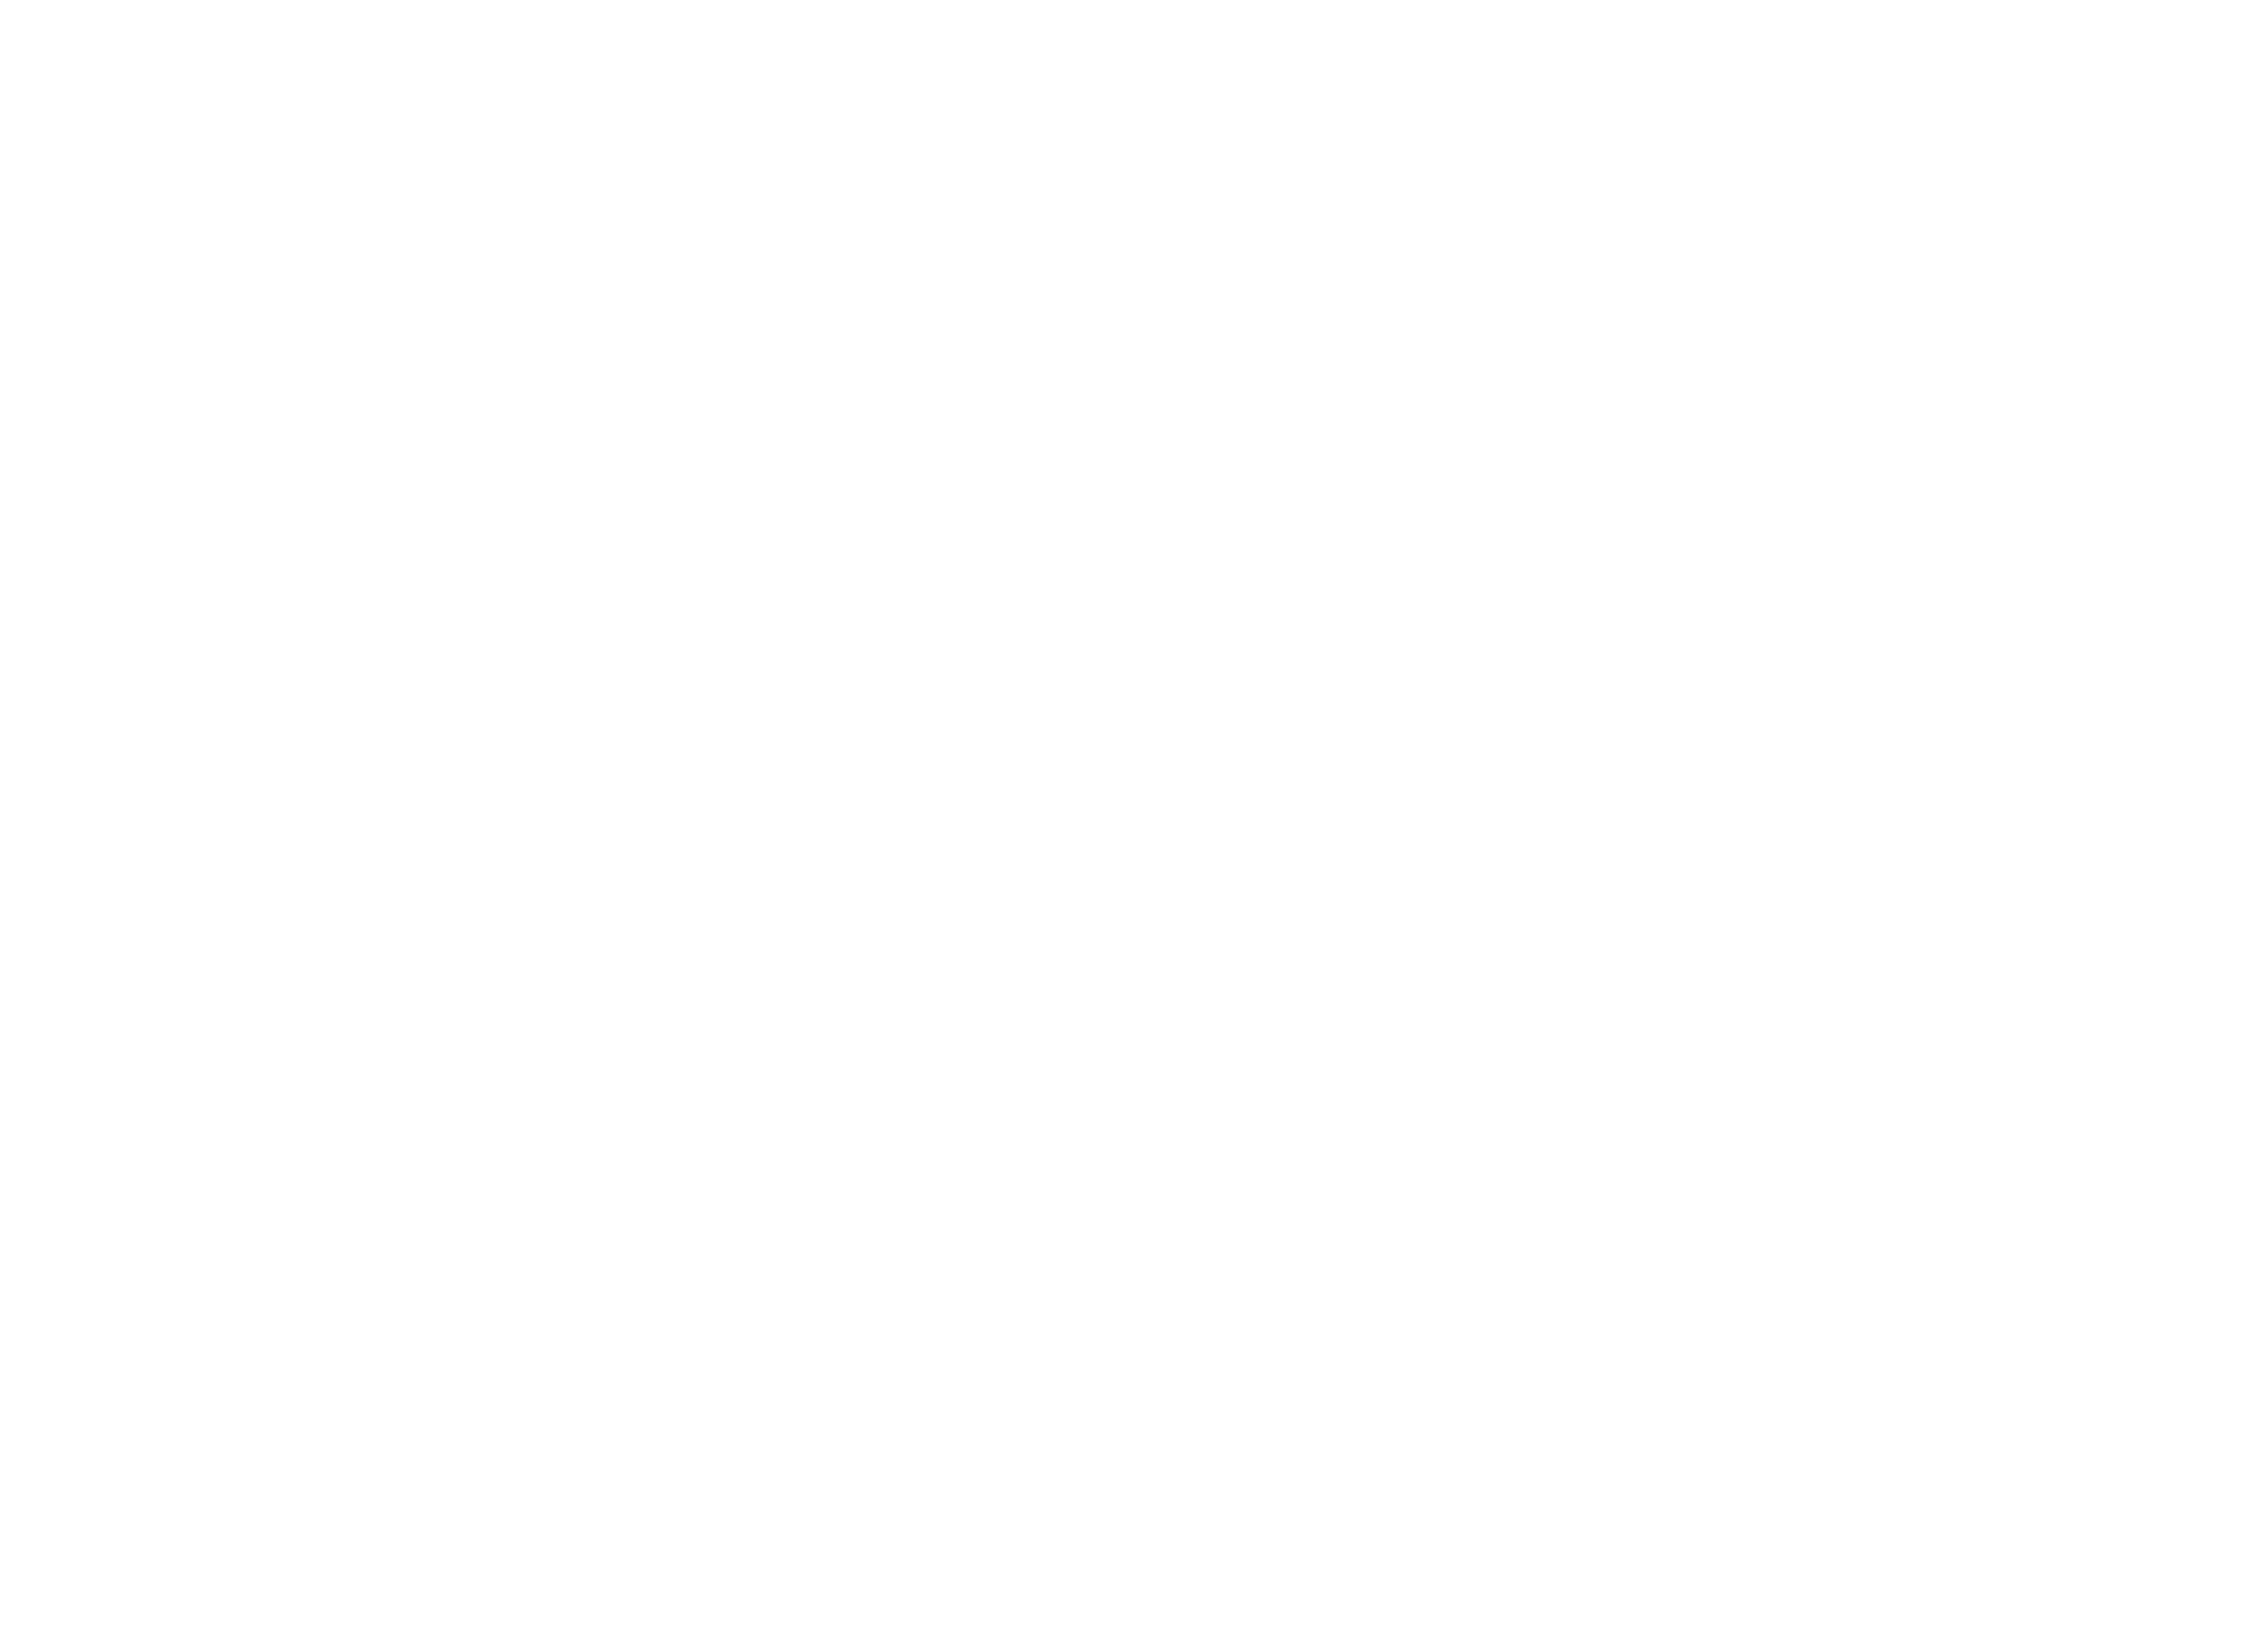 The Sales Advisory